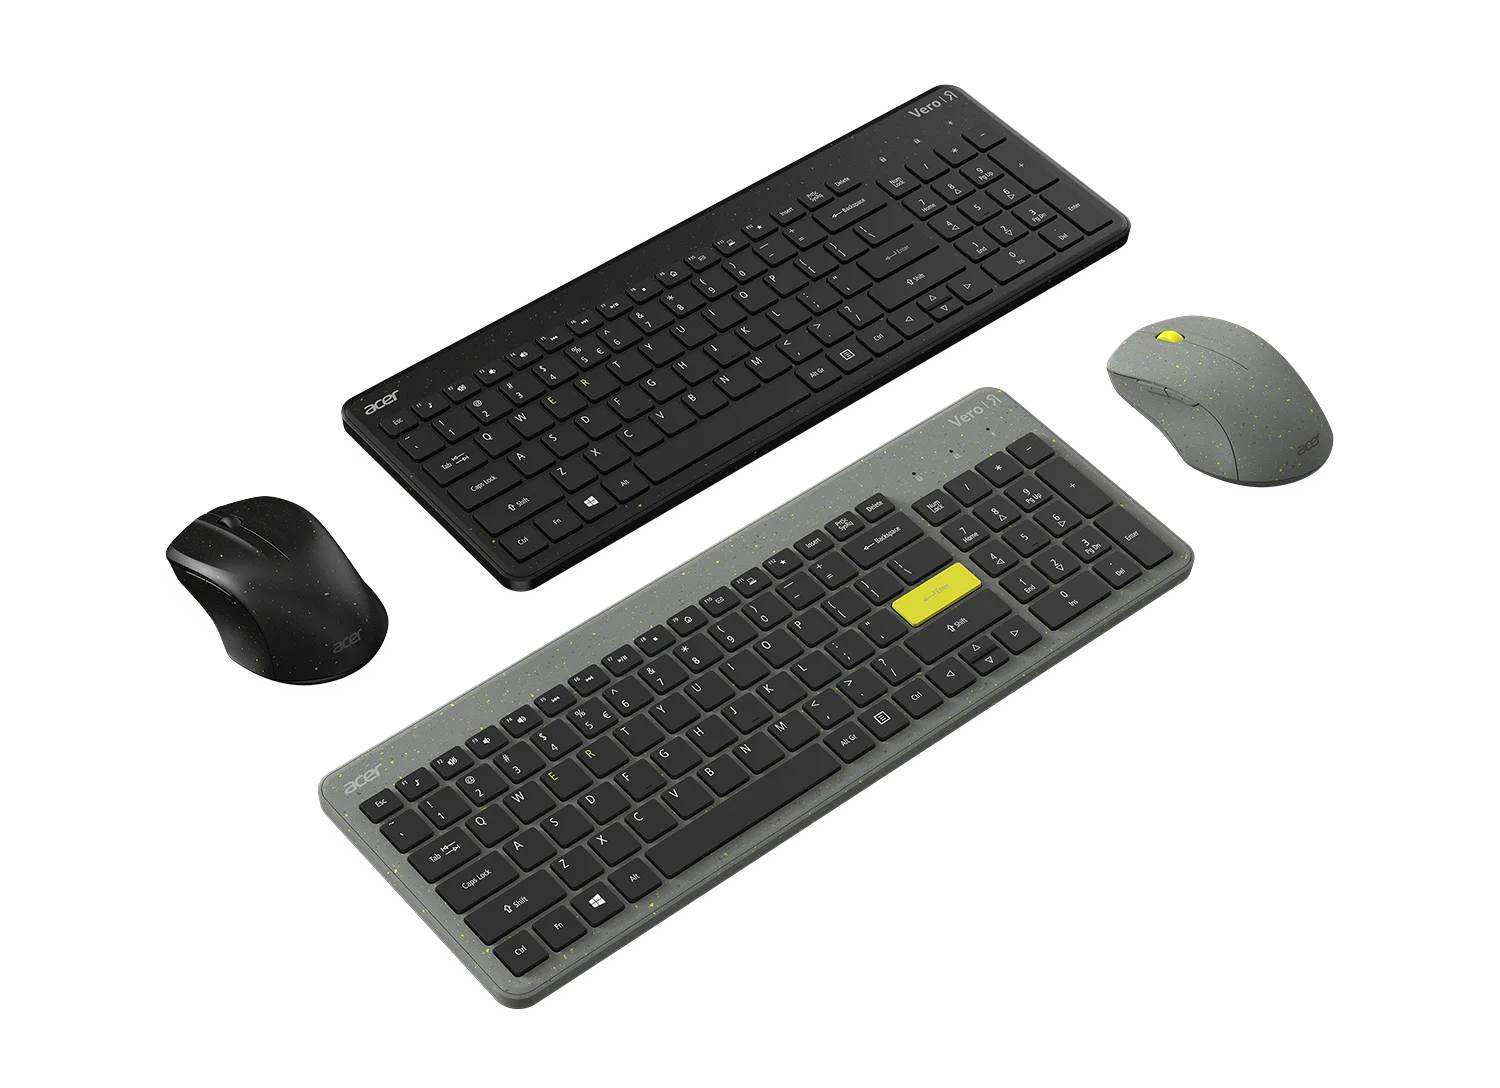 Vero Keyboard Mouse 01